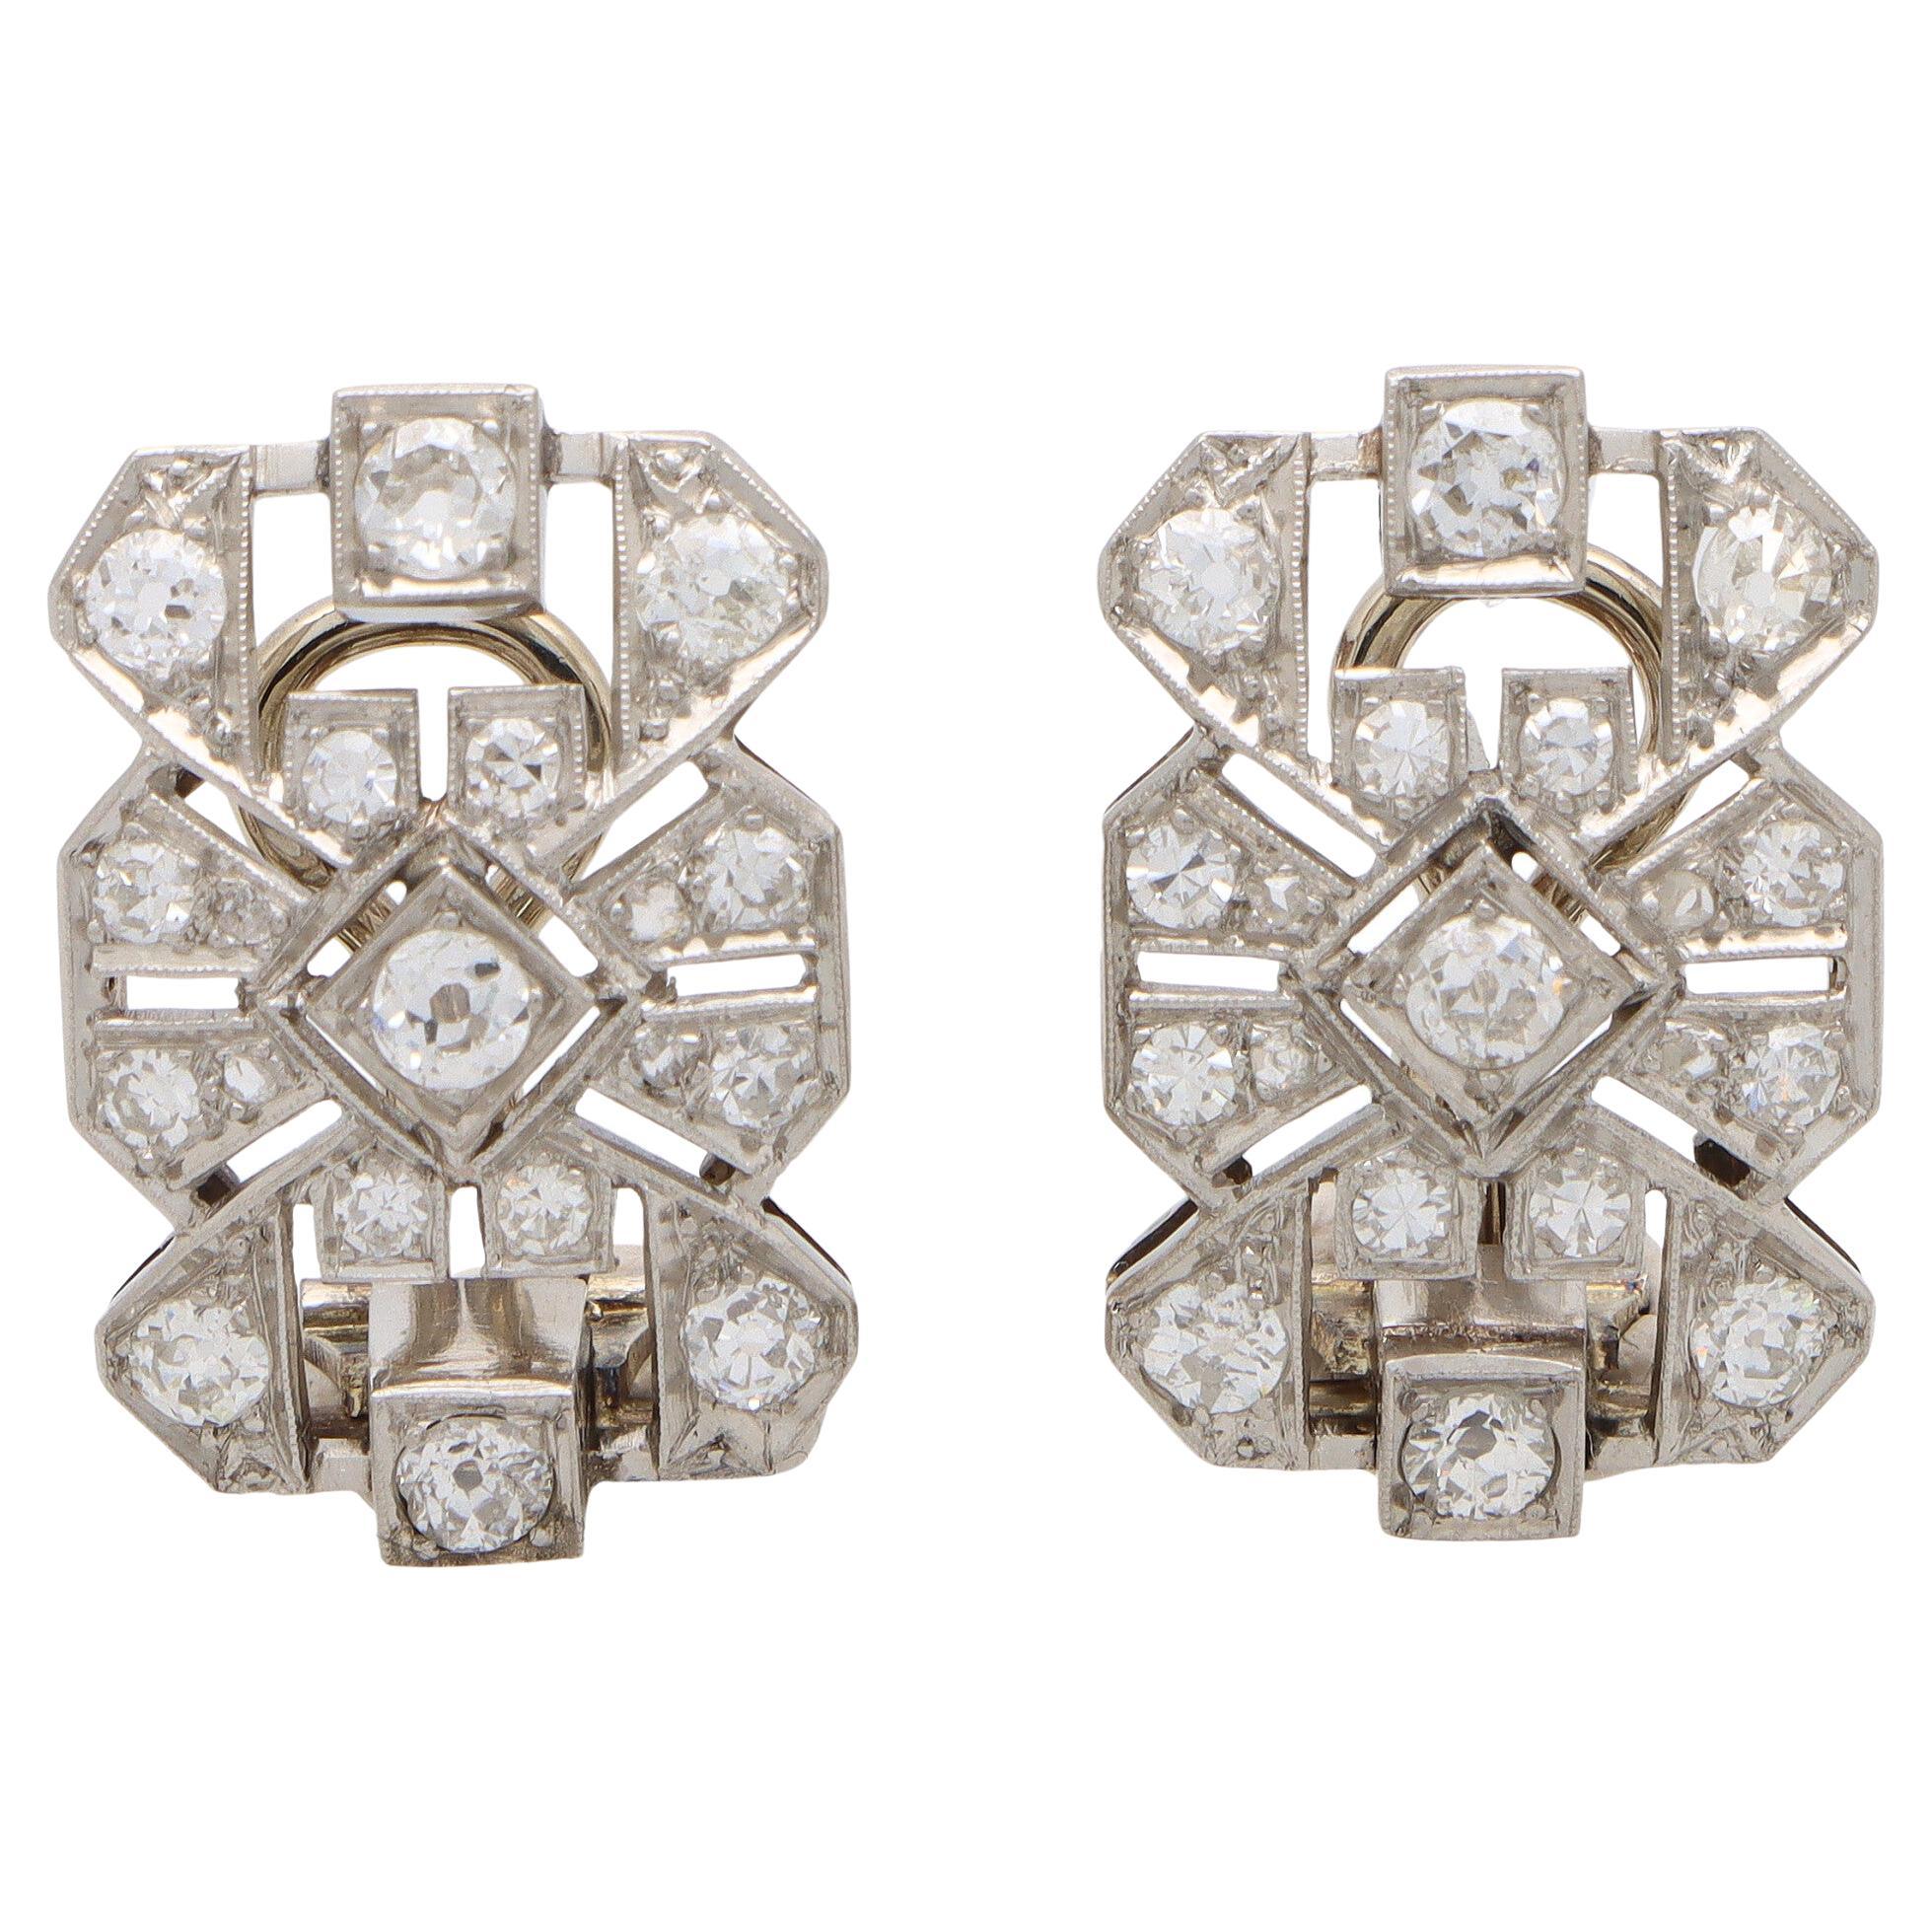 Late Art Deco Diamond Panel Earrings Set in Platinum and 18k White Gold